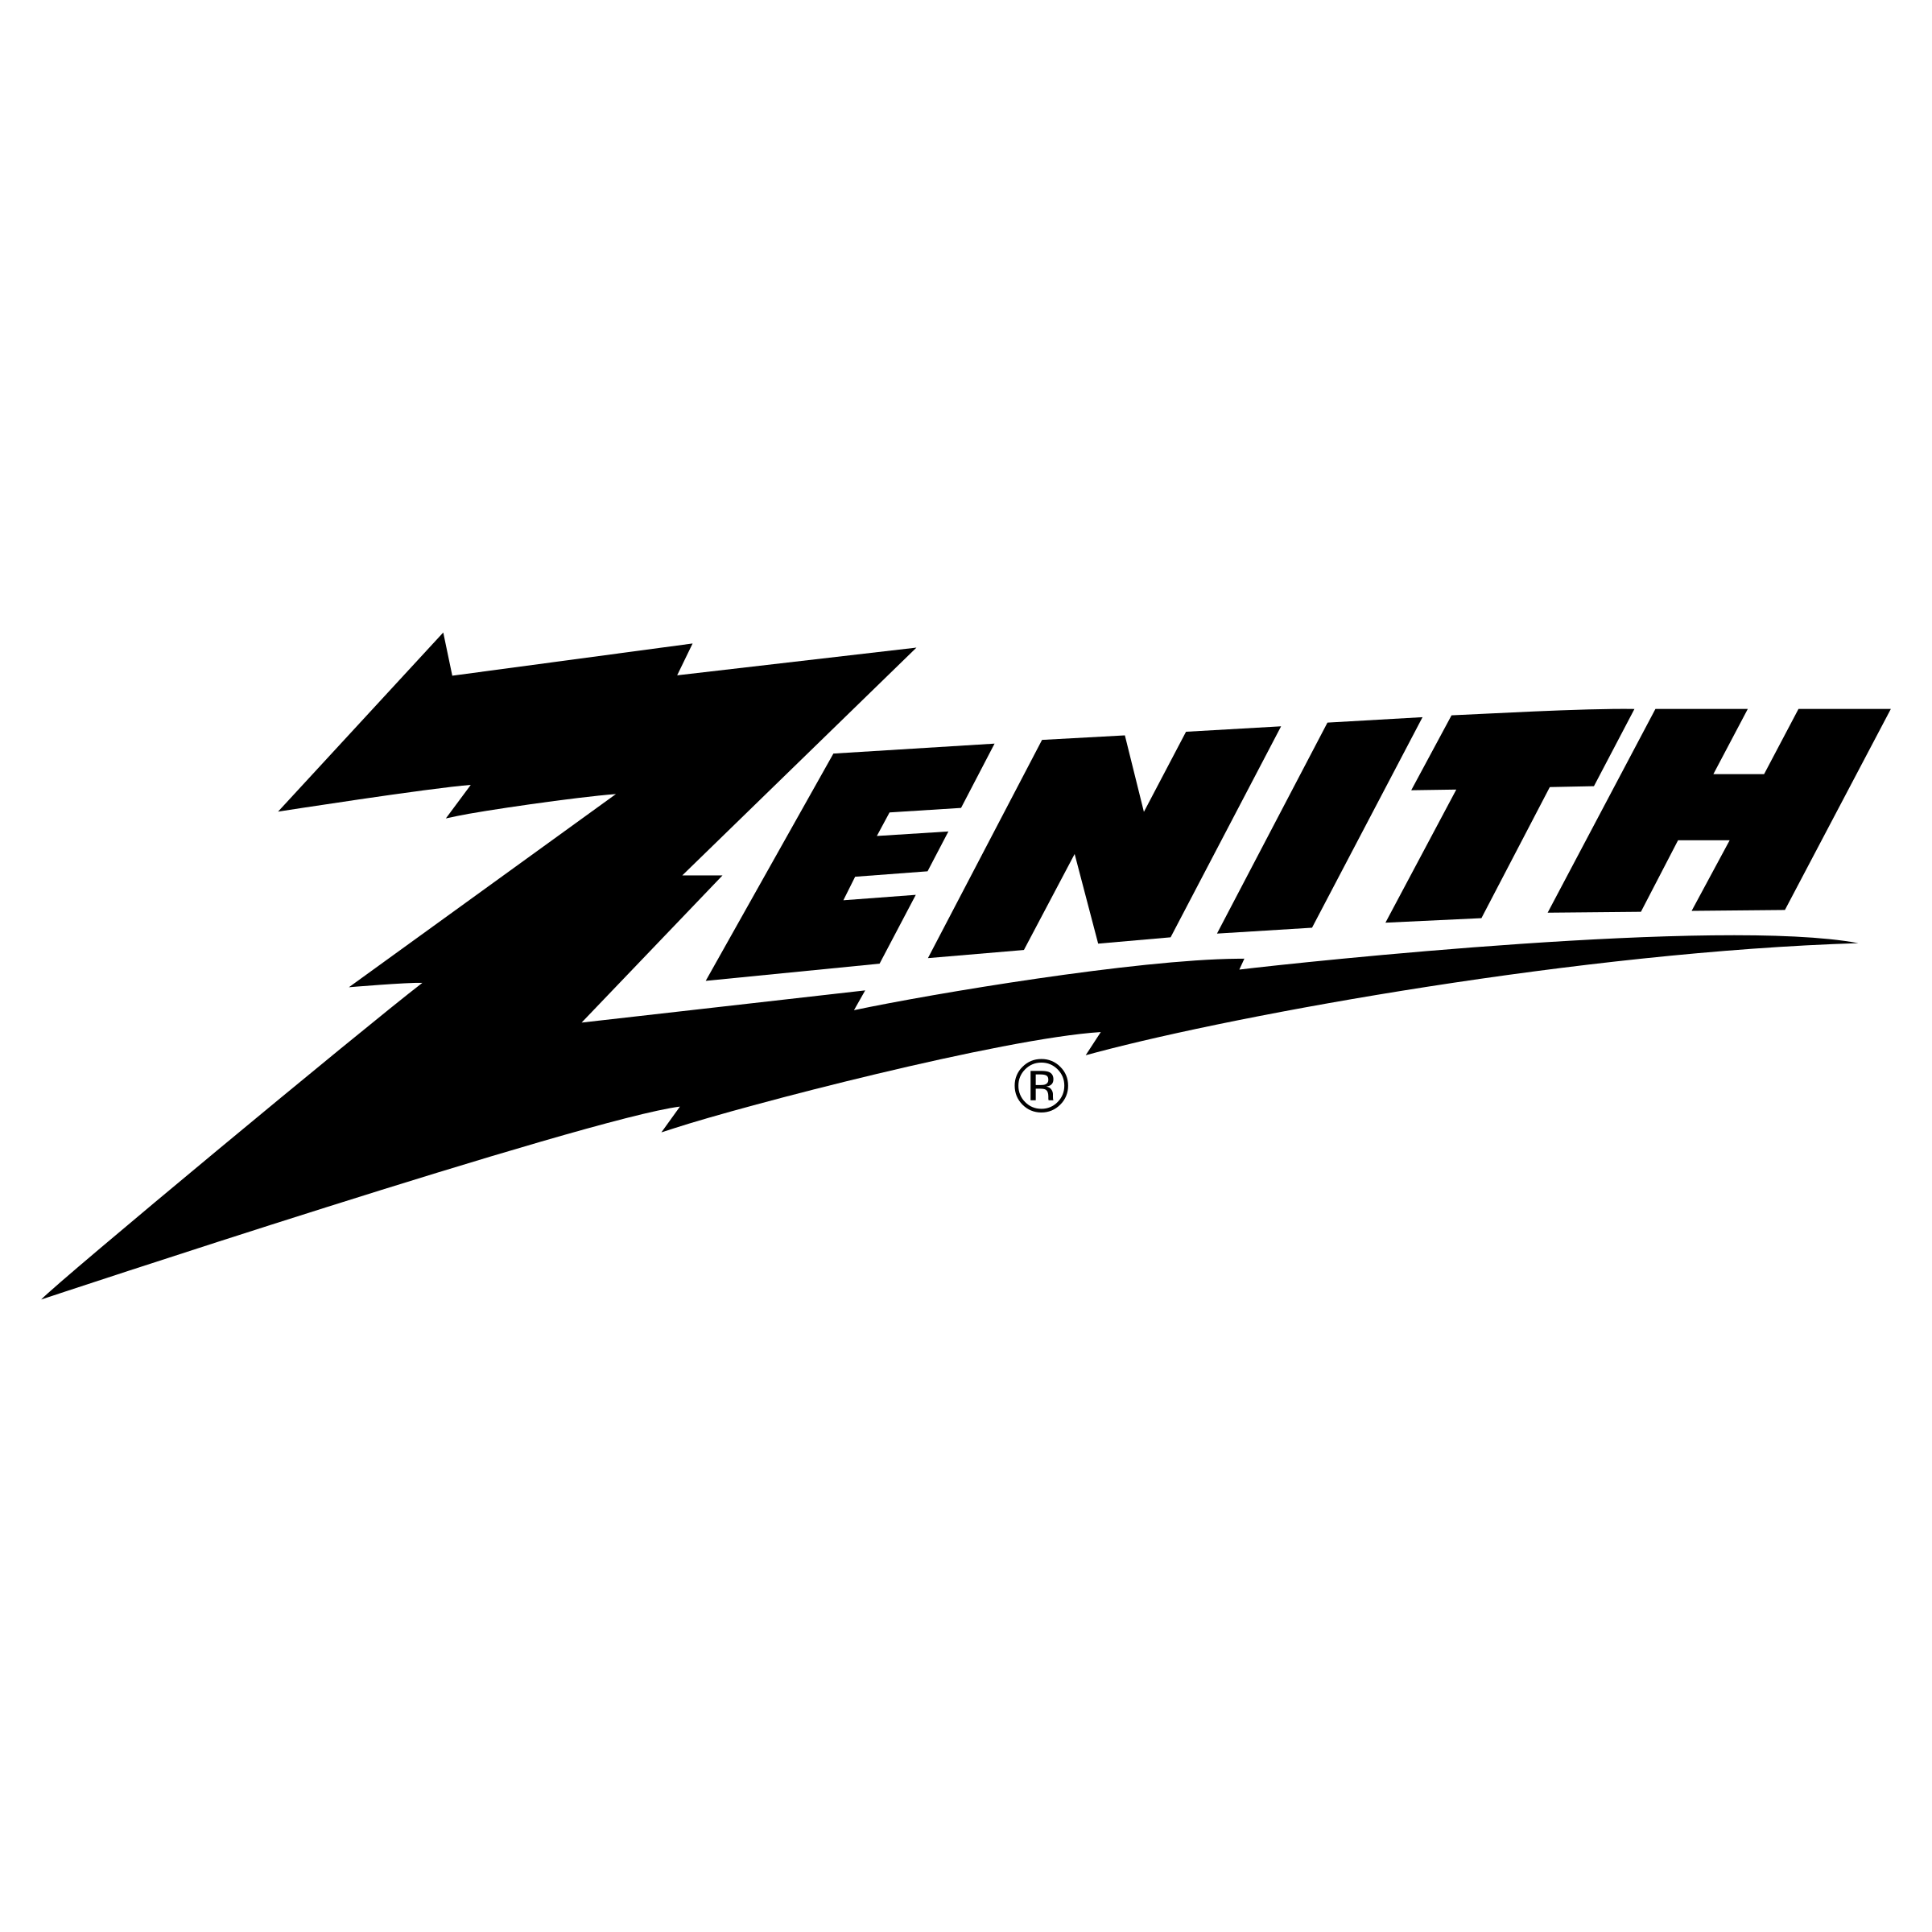 Zenith Logo - Zenith Logo PNG Transparent & SVG Vector - Freebie Supply